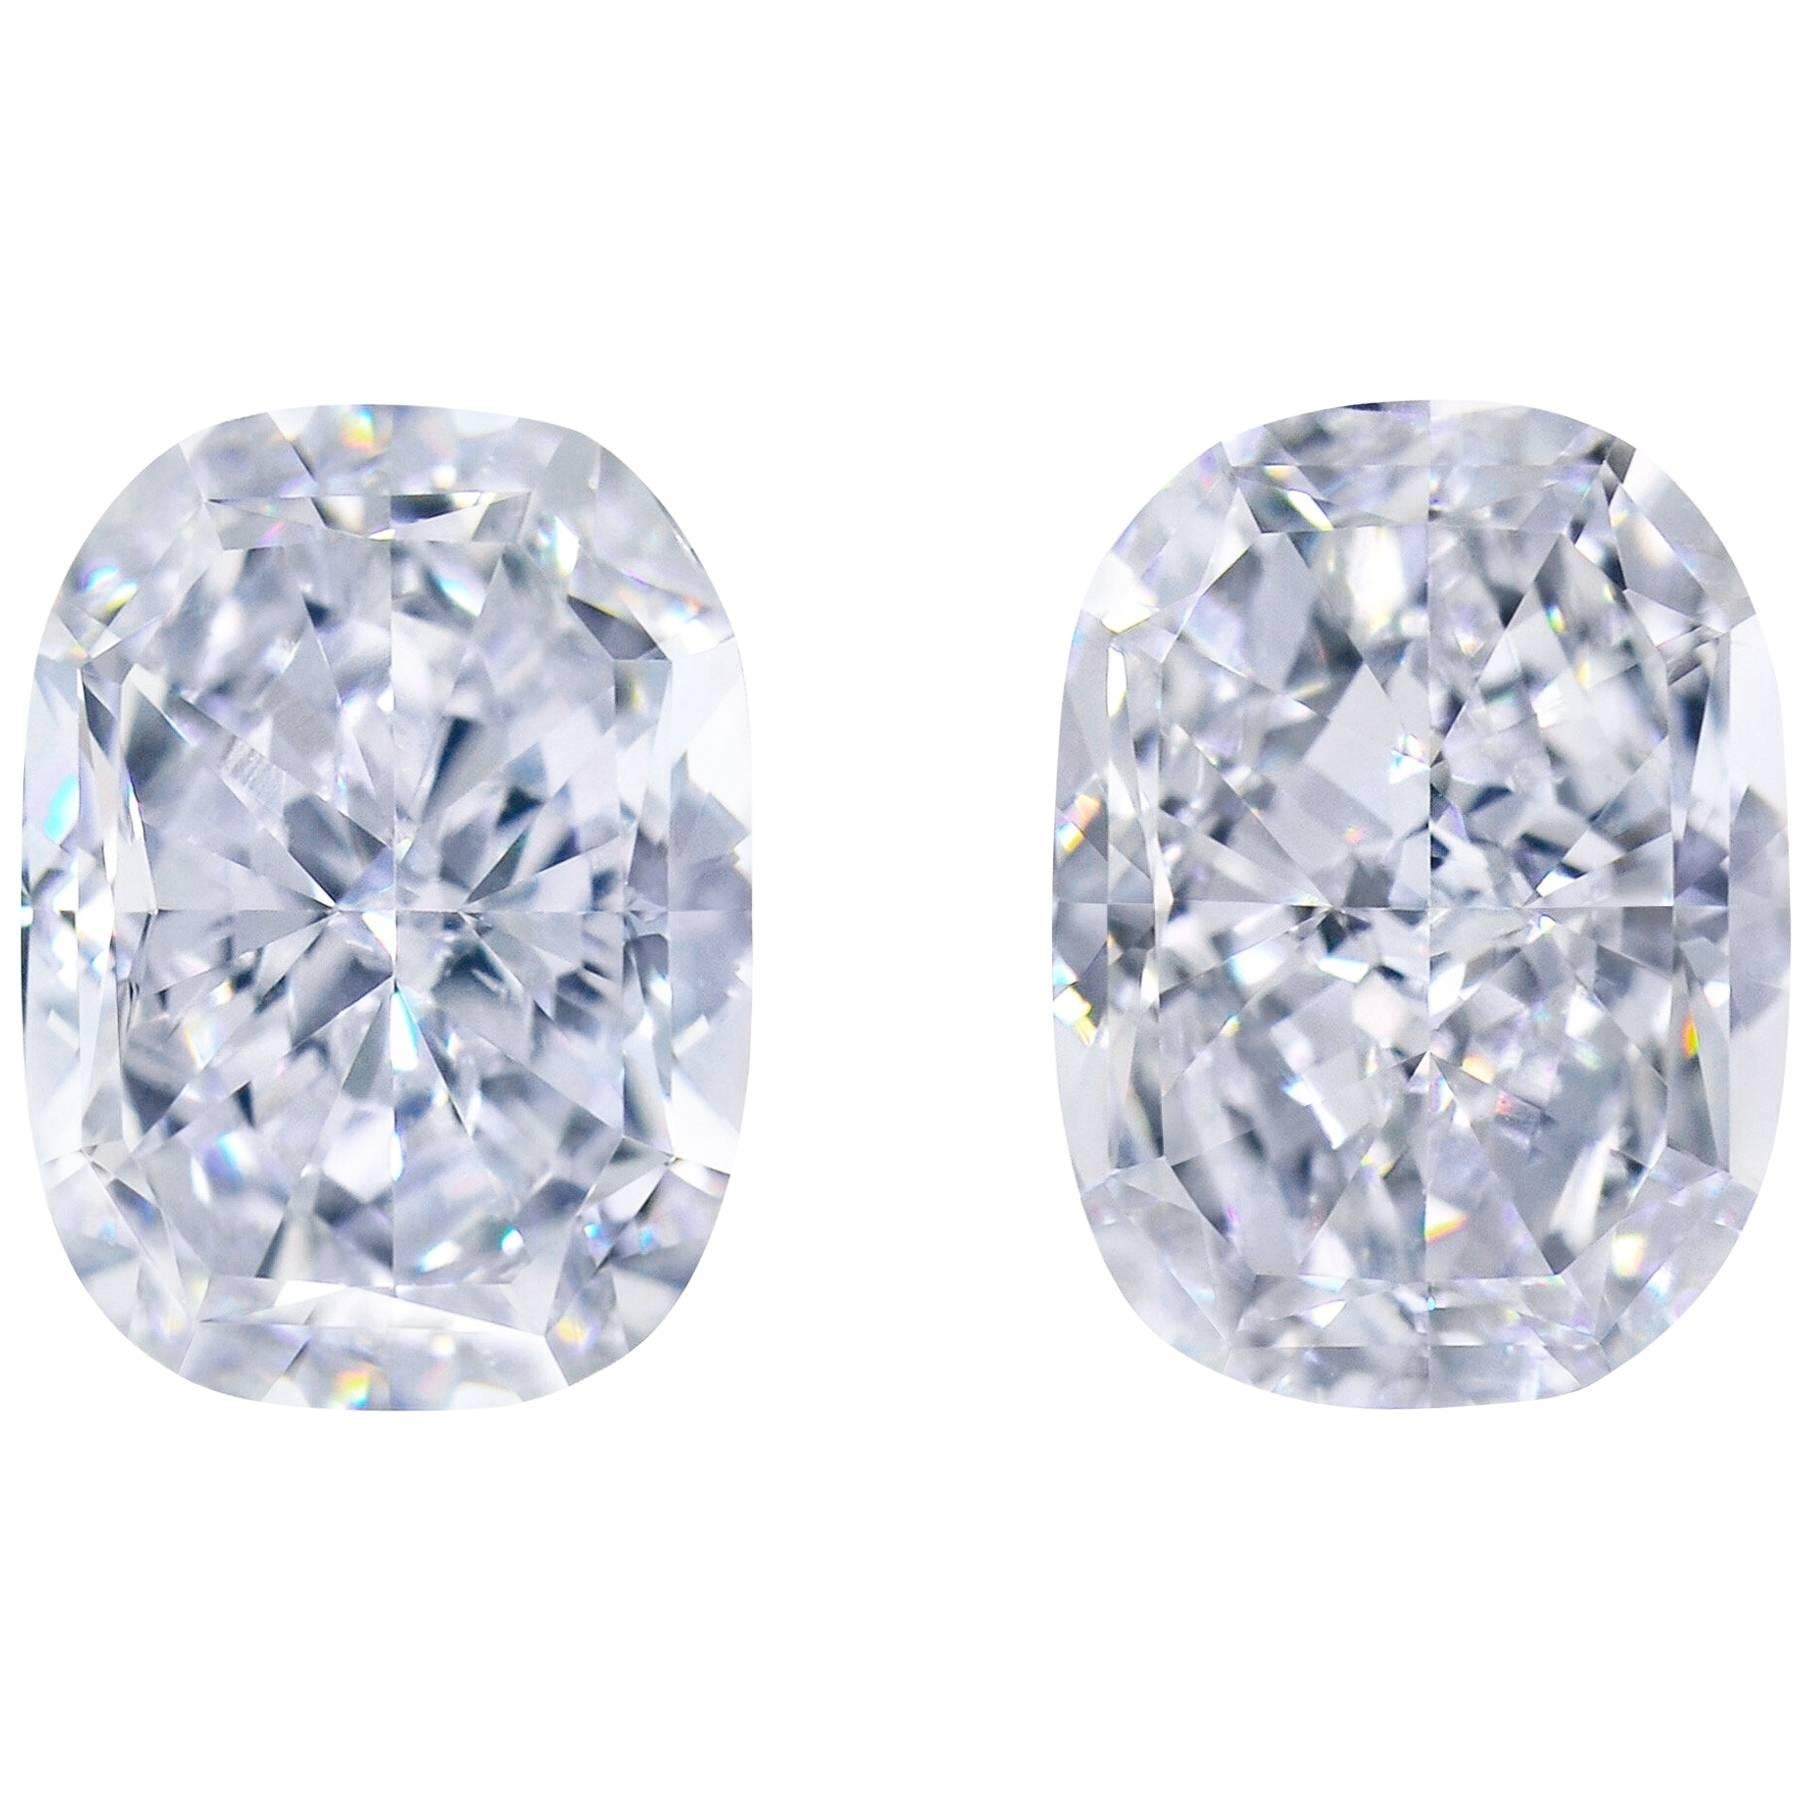 Magnificent Fancy Blue Diamond Pair of 3.10 Carat